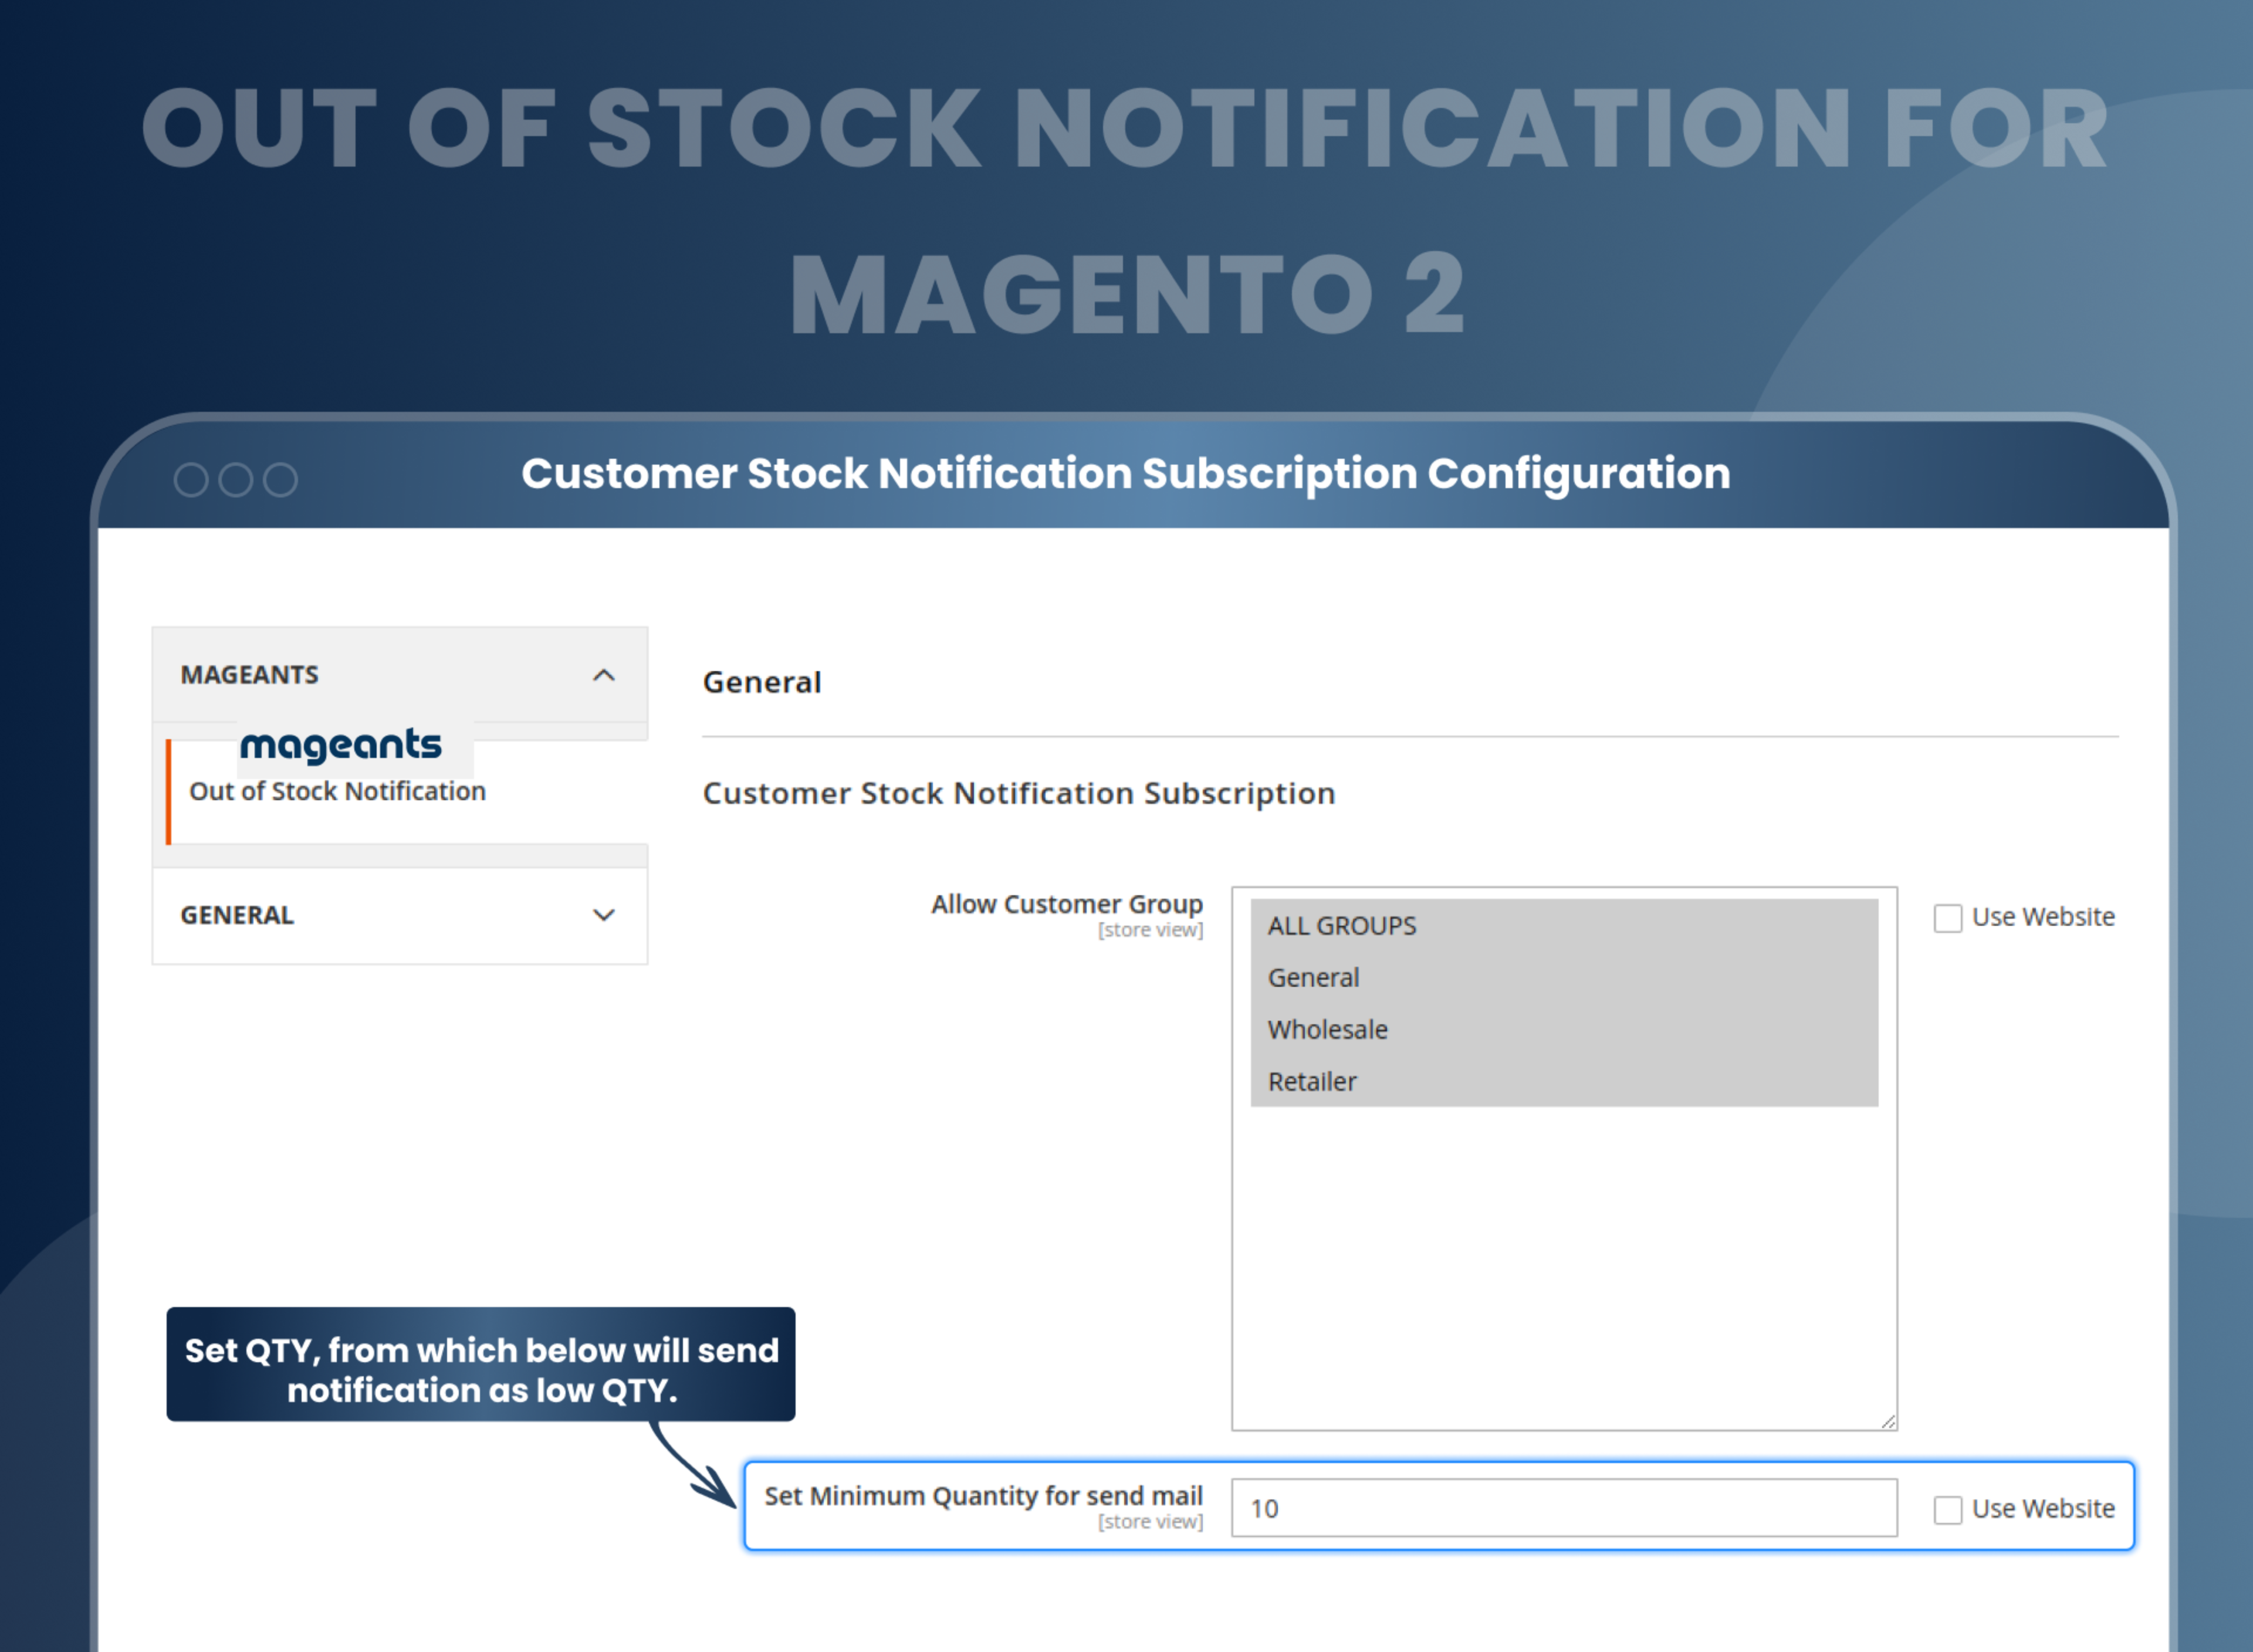 Customer Stock Notification Subscription Configuration